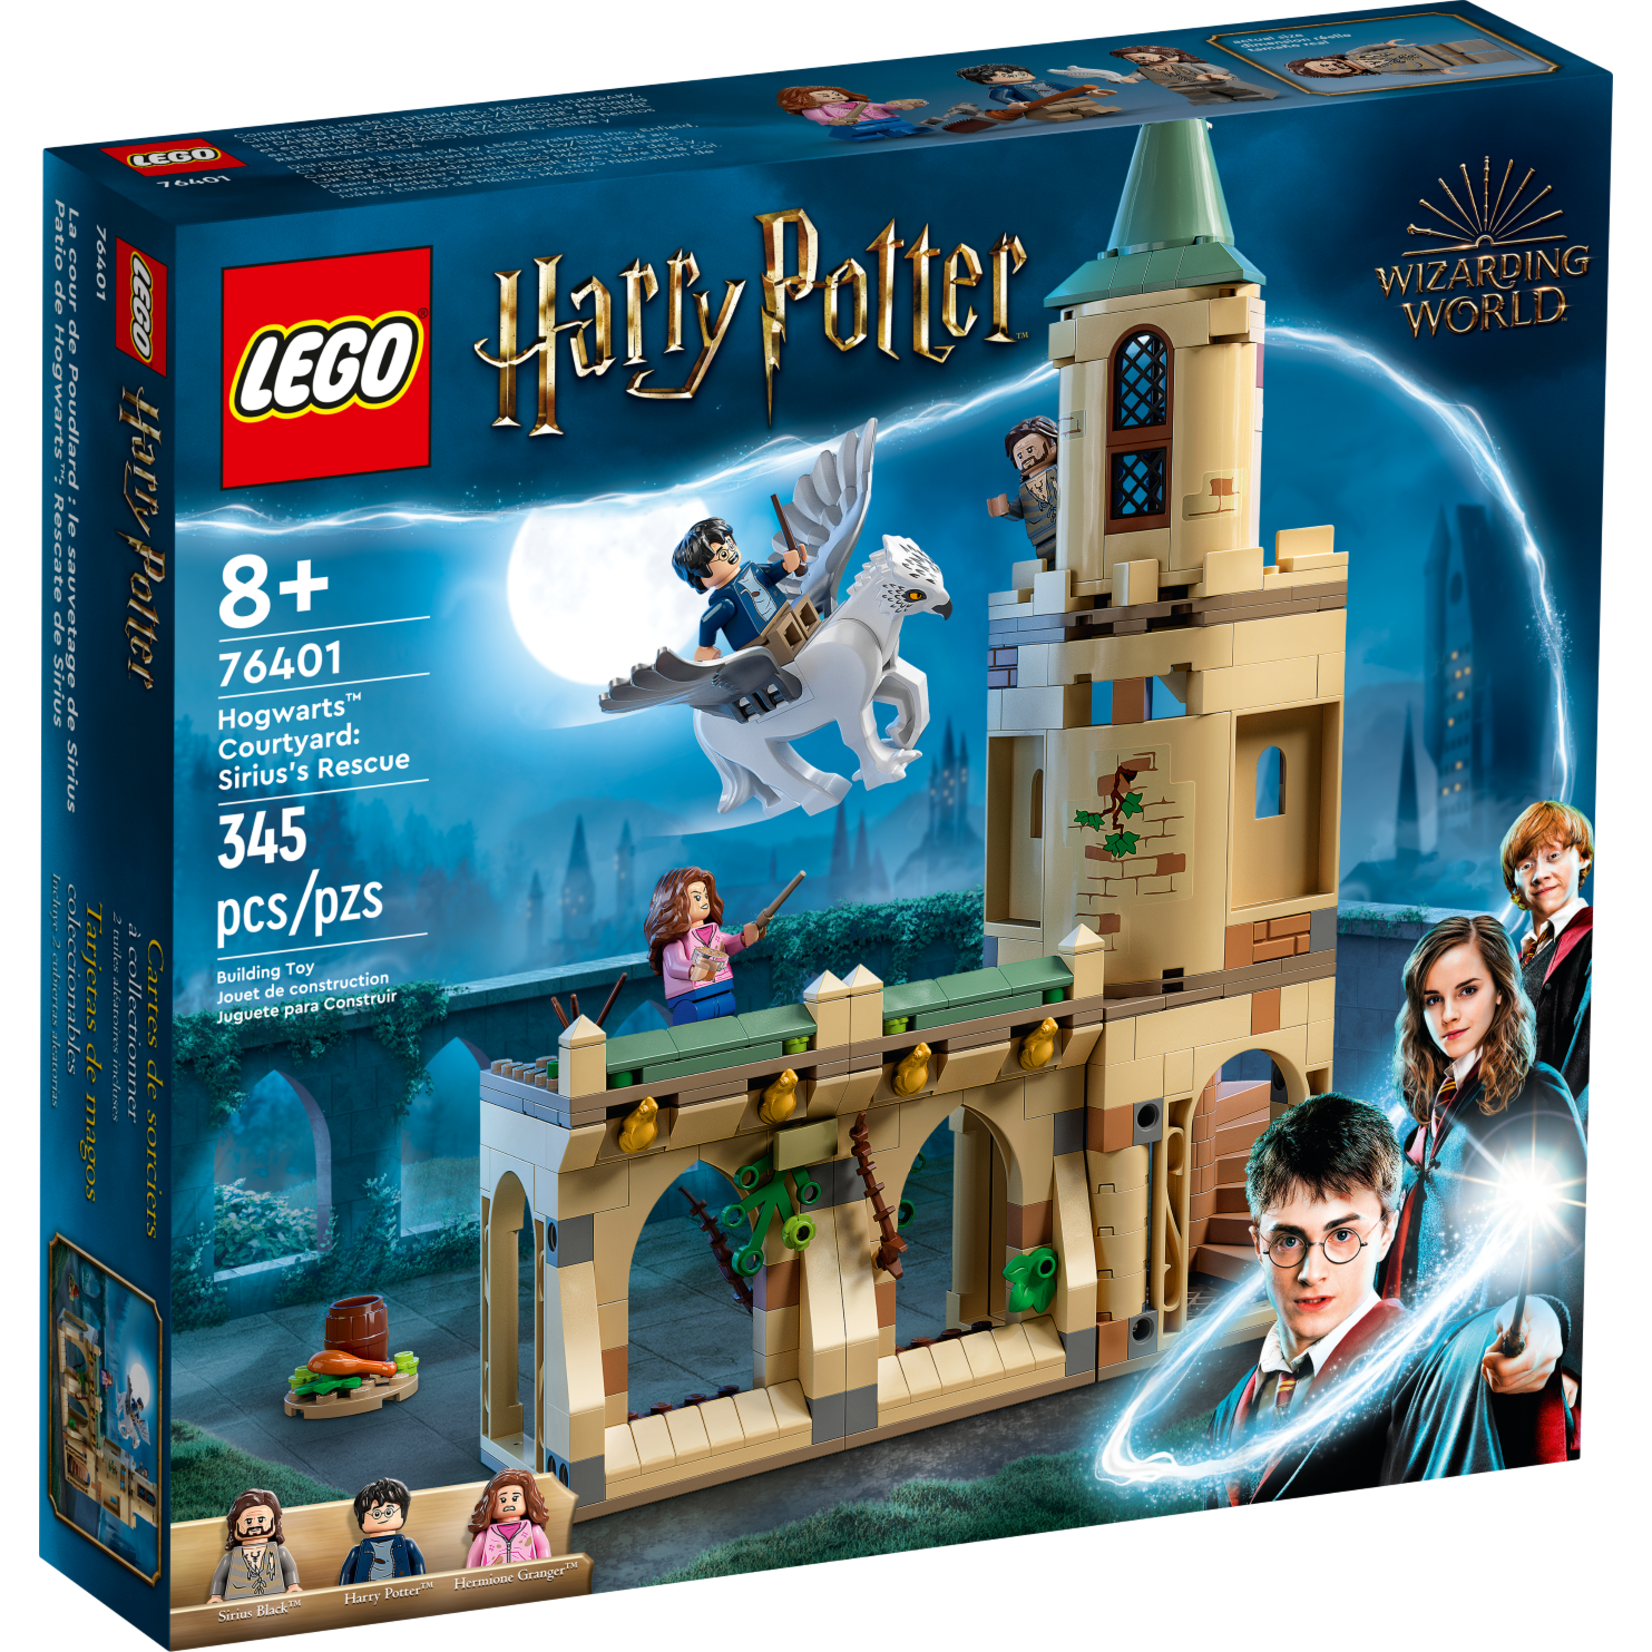 LEGO LEGO Harry Potter Hogwarts™ Courtyard: Sirius's Rescue 76401